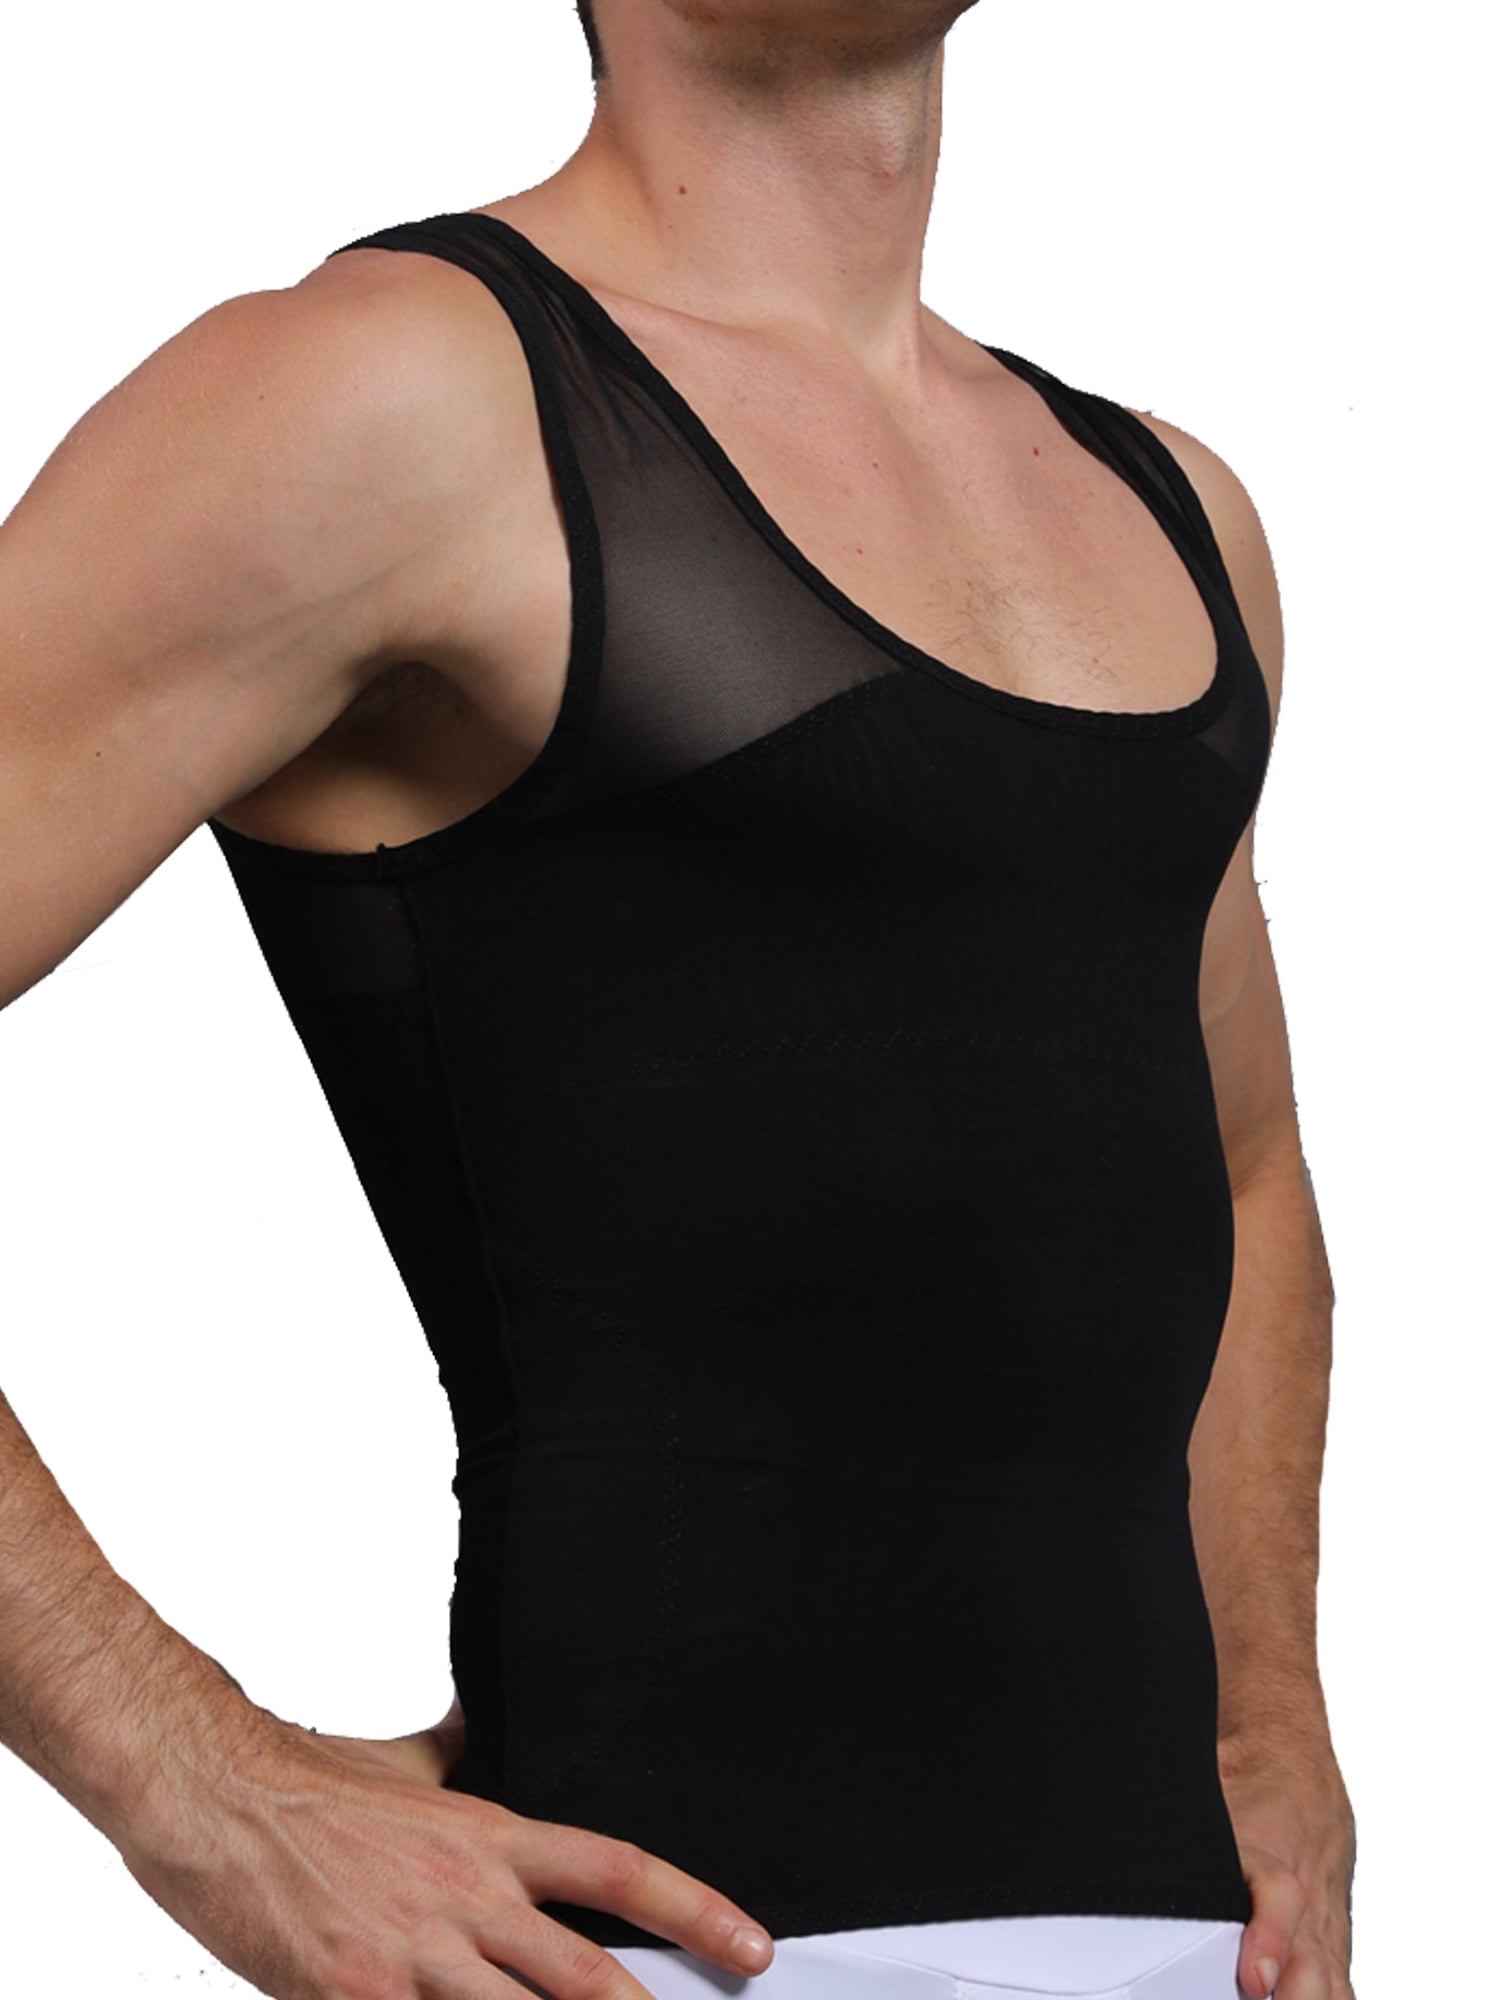 Mens Slimming Shirt Body Shaper Magic Compression Slim Undershirts Gynecomastia